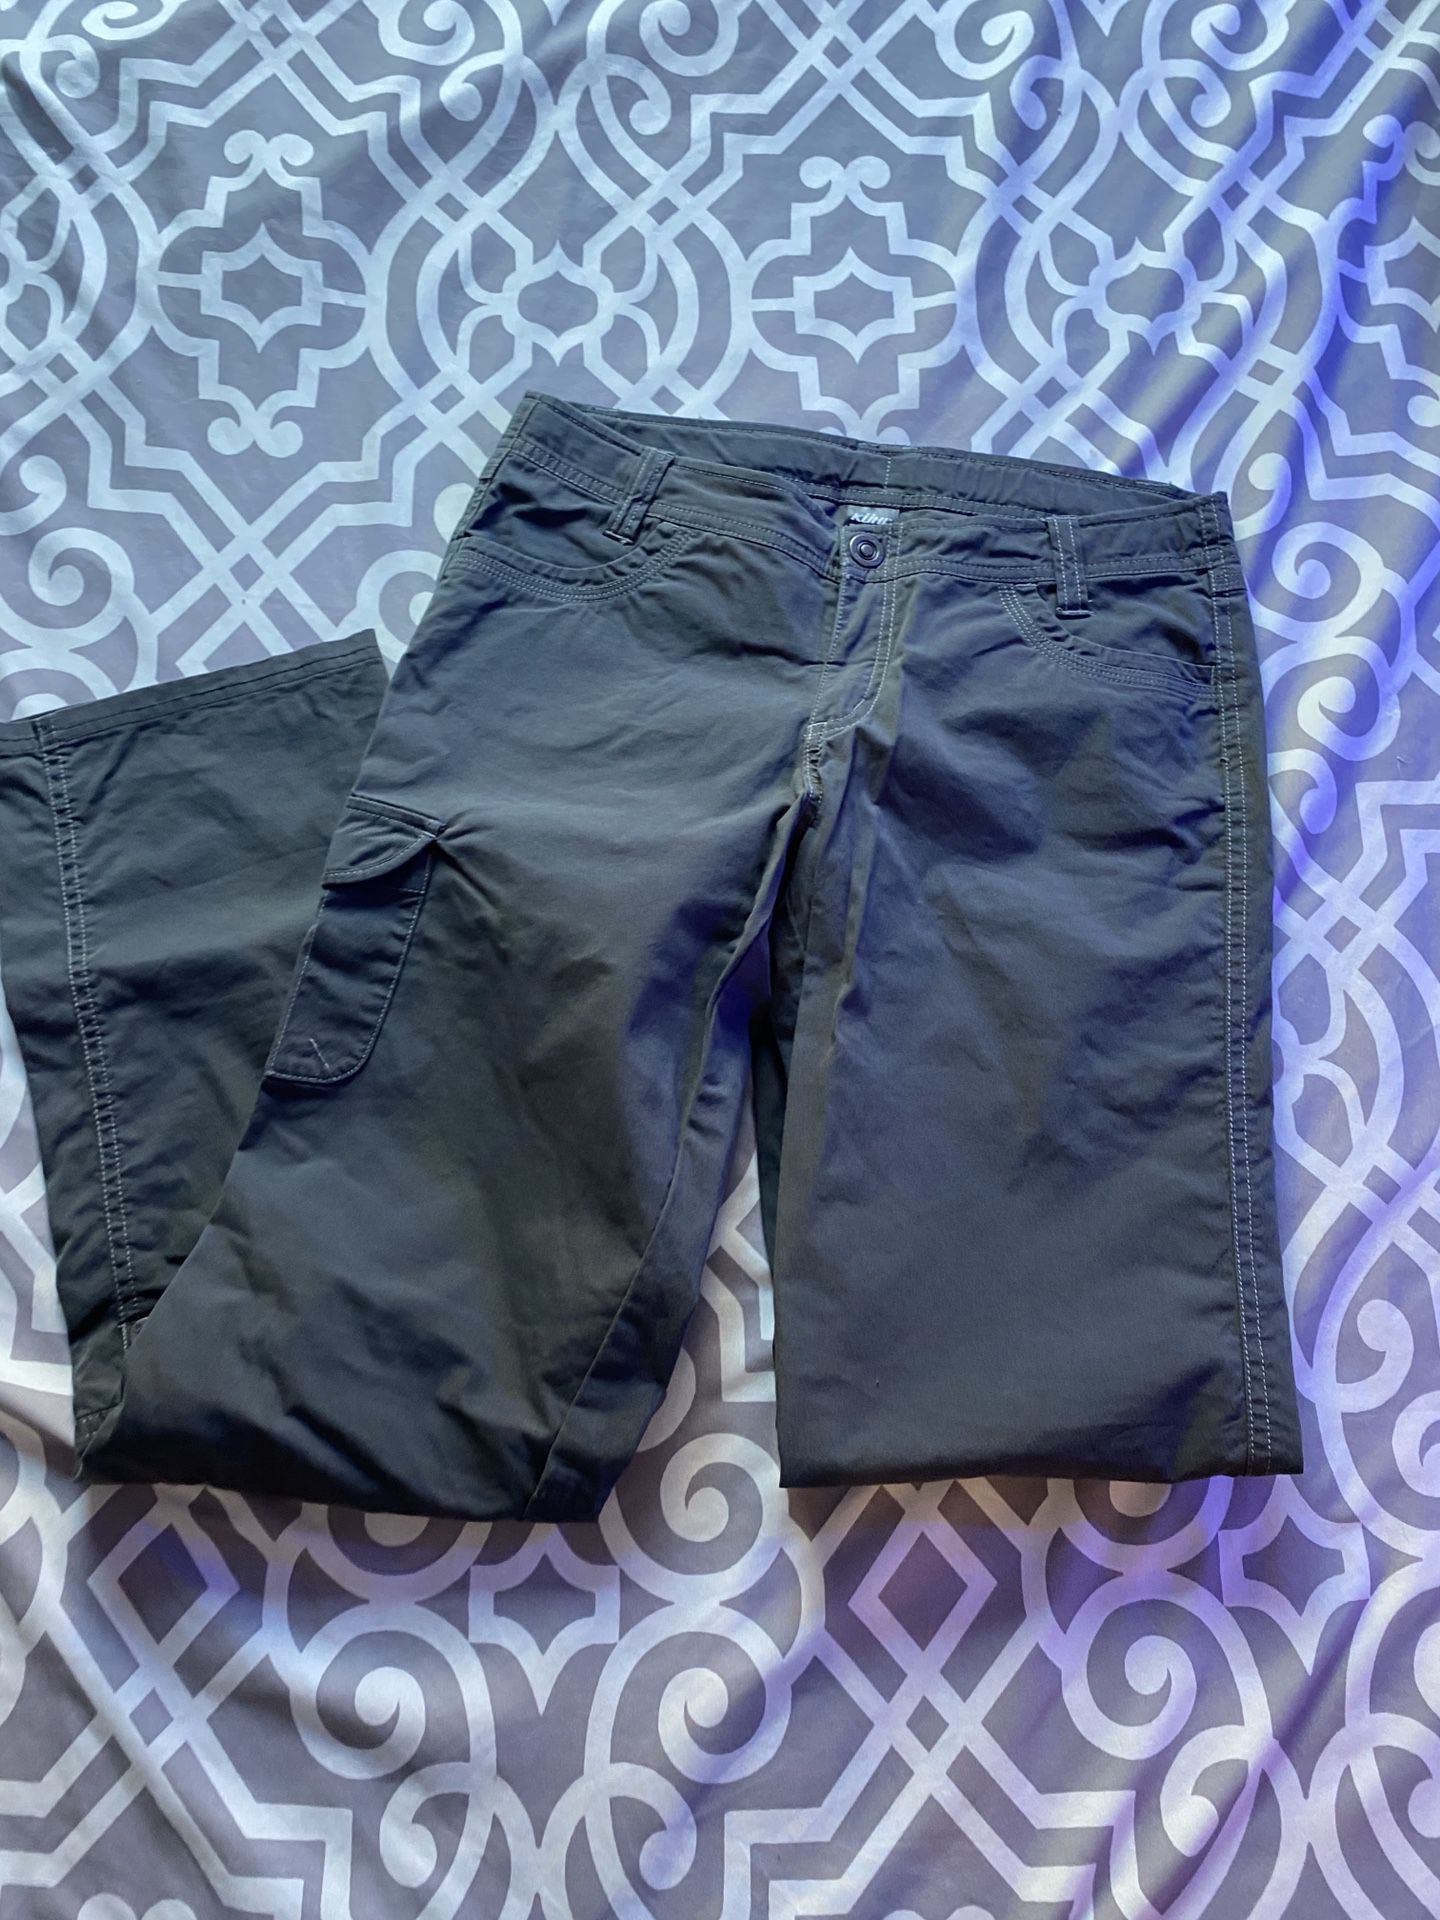 Kuhl Active Hiking Pants Grey Size XL 16 Kids Outdoors Camping